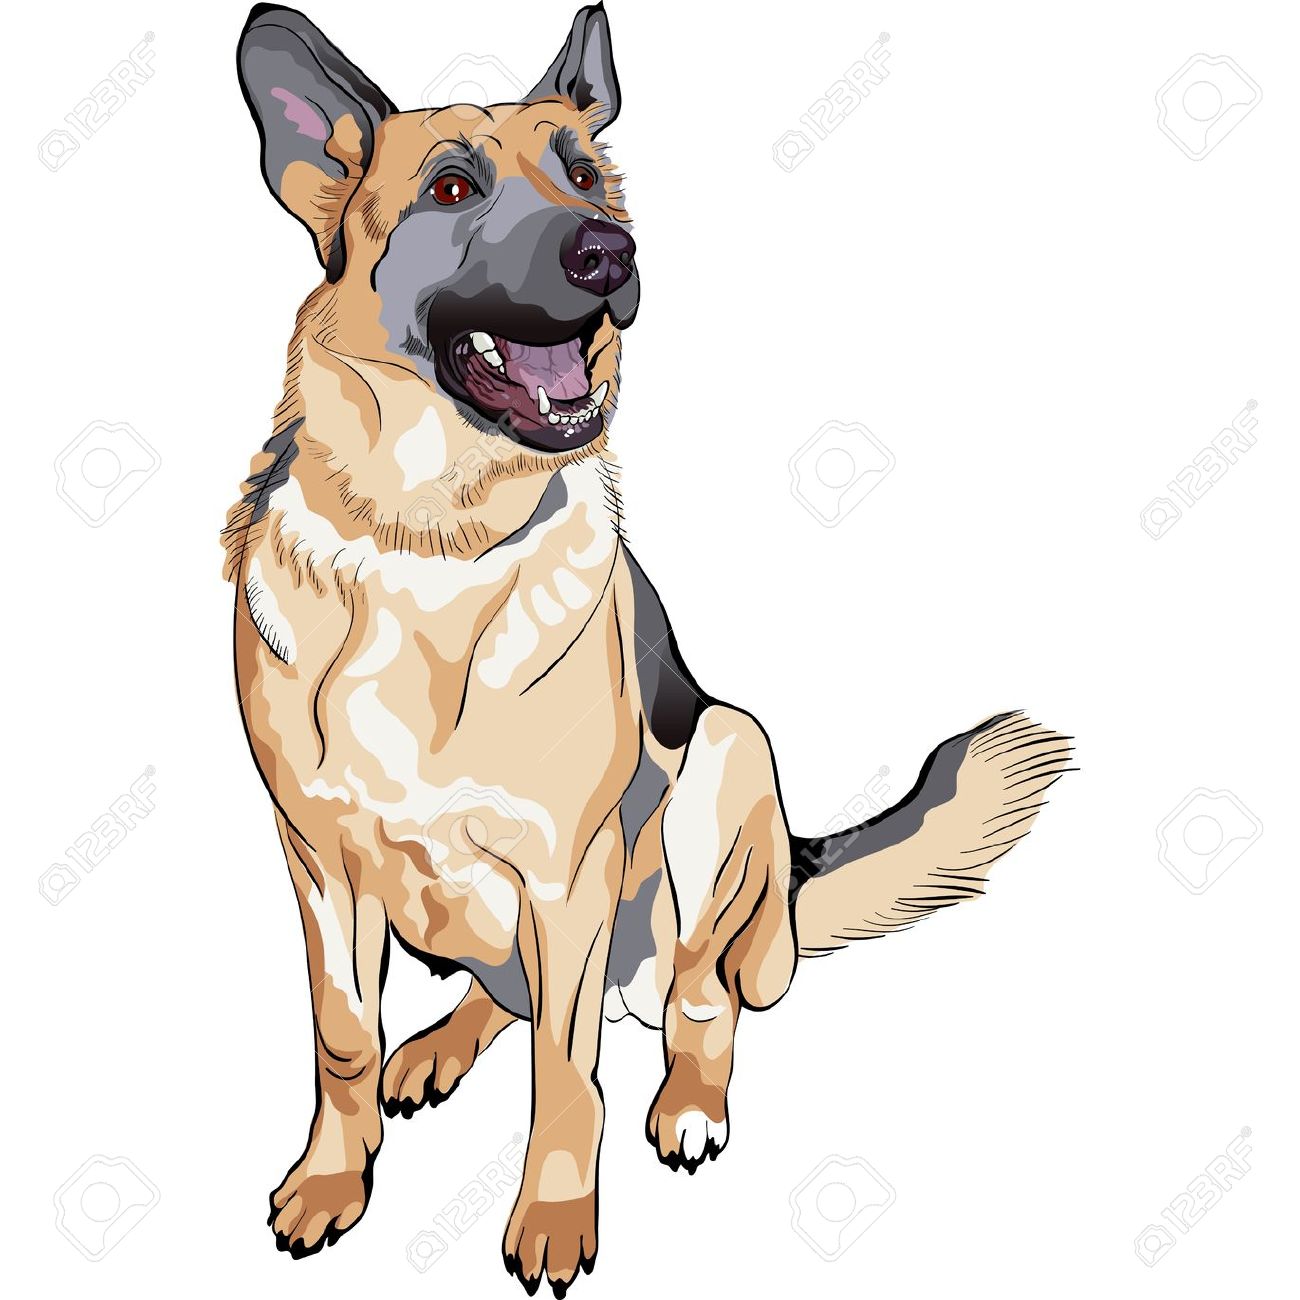 german shepherd: portrait of a dog German shepherd breed sitting and smile